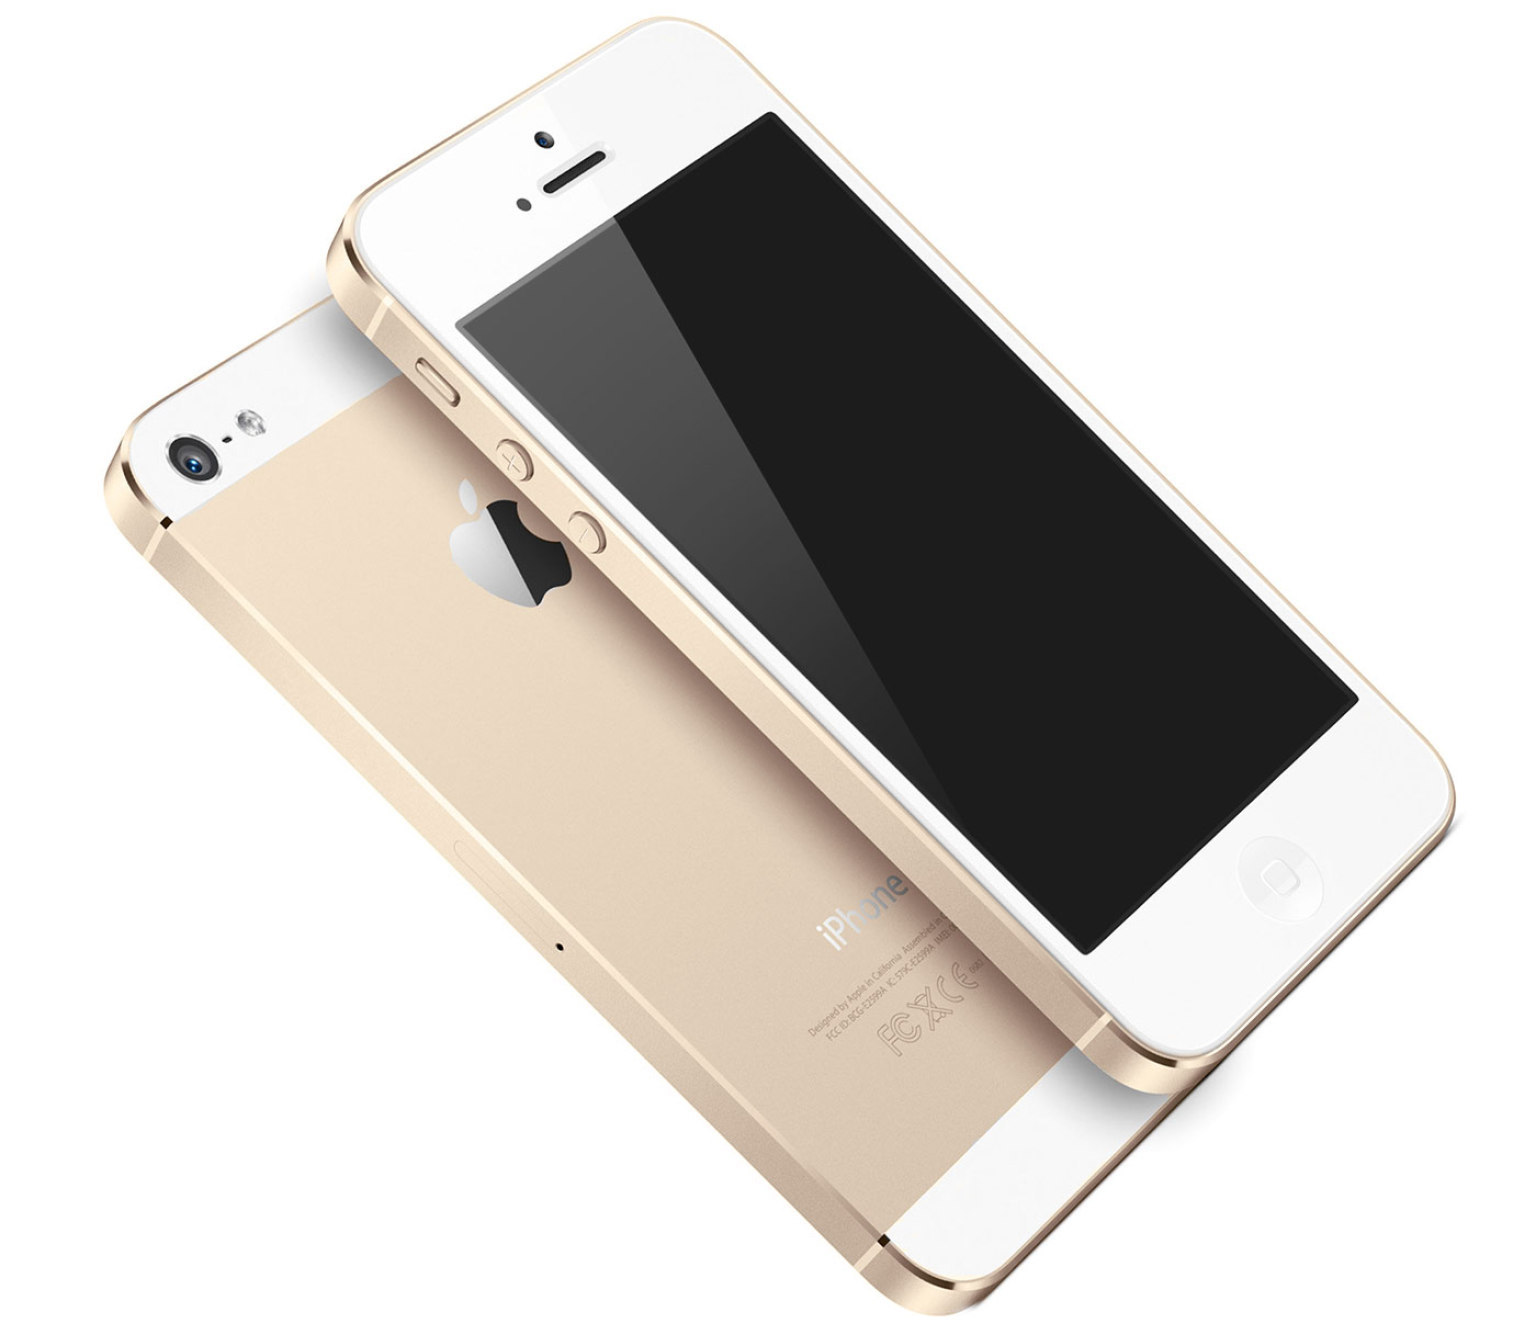 Gold mobile. Apple iphone 5s 16gb. Айфон 5s Gold. Айфон 5s Голд. Айфон 5s золотой.